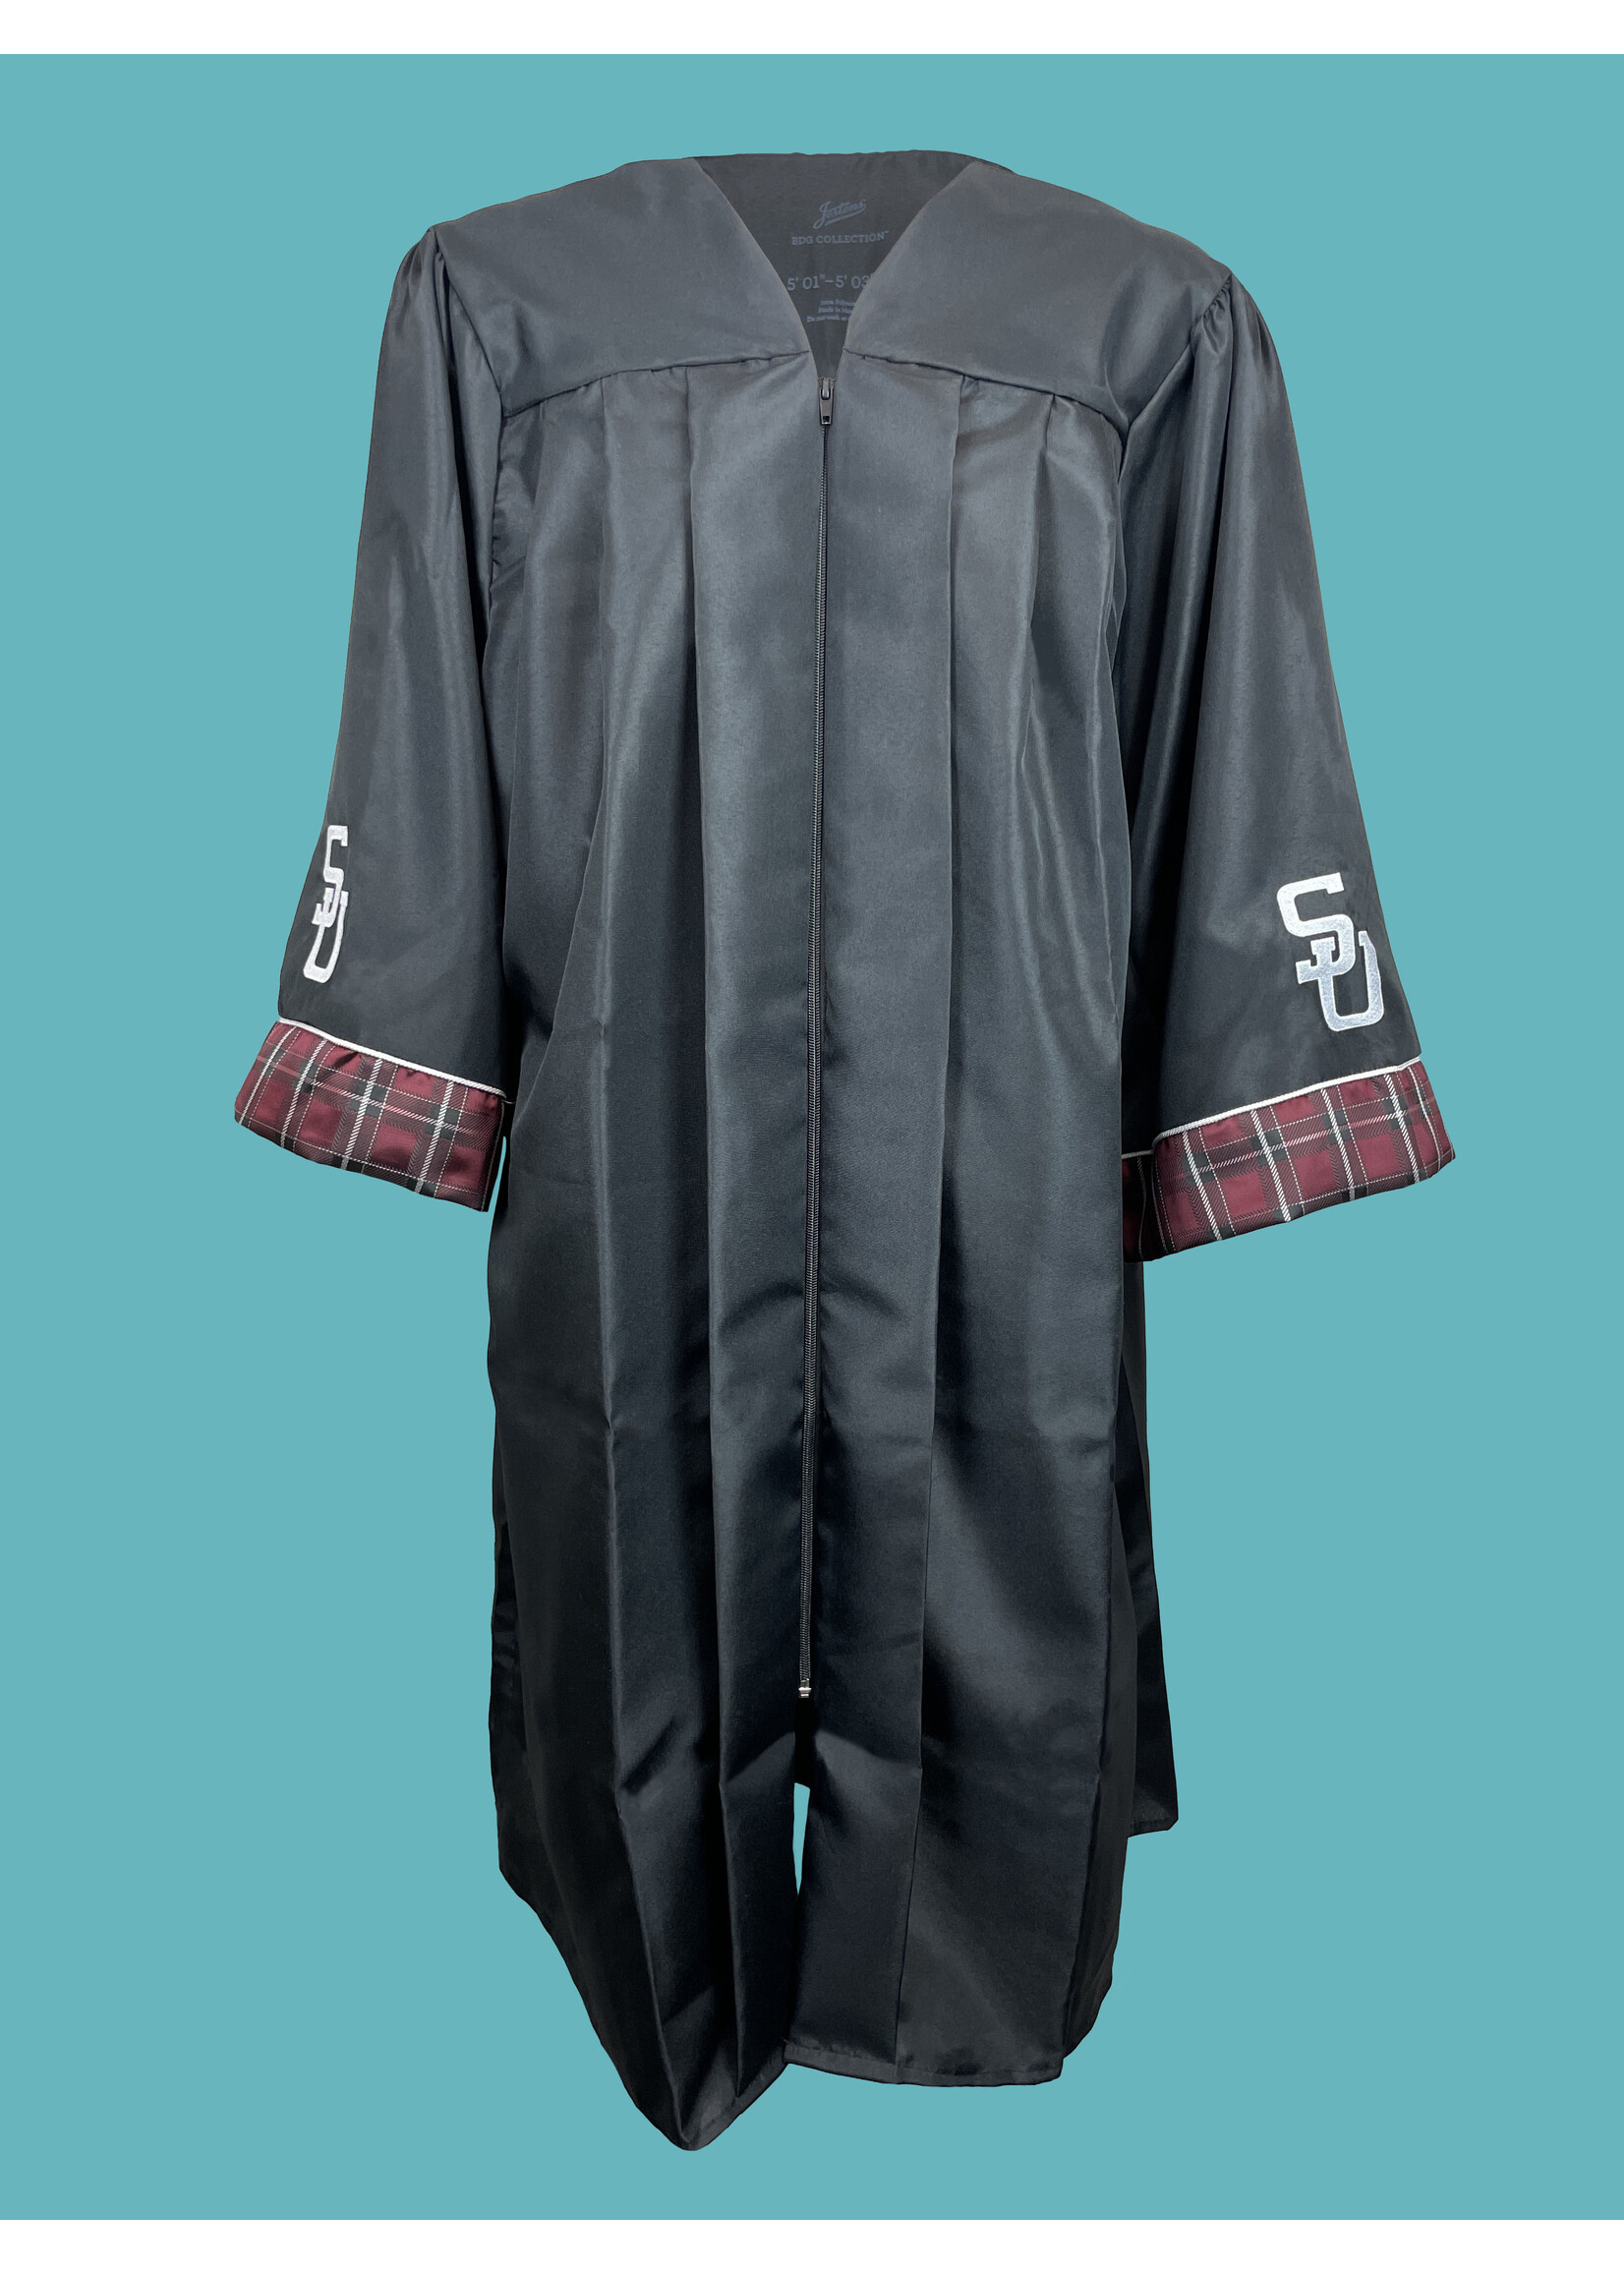 Jostens Bachelor's Graduation Robe